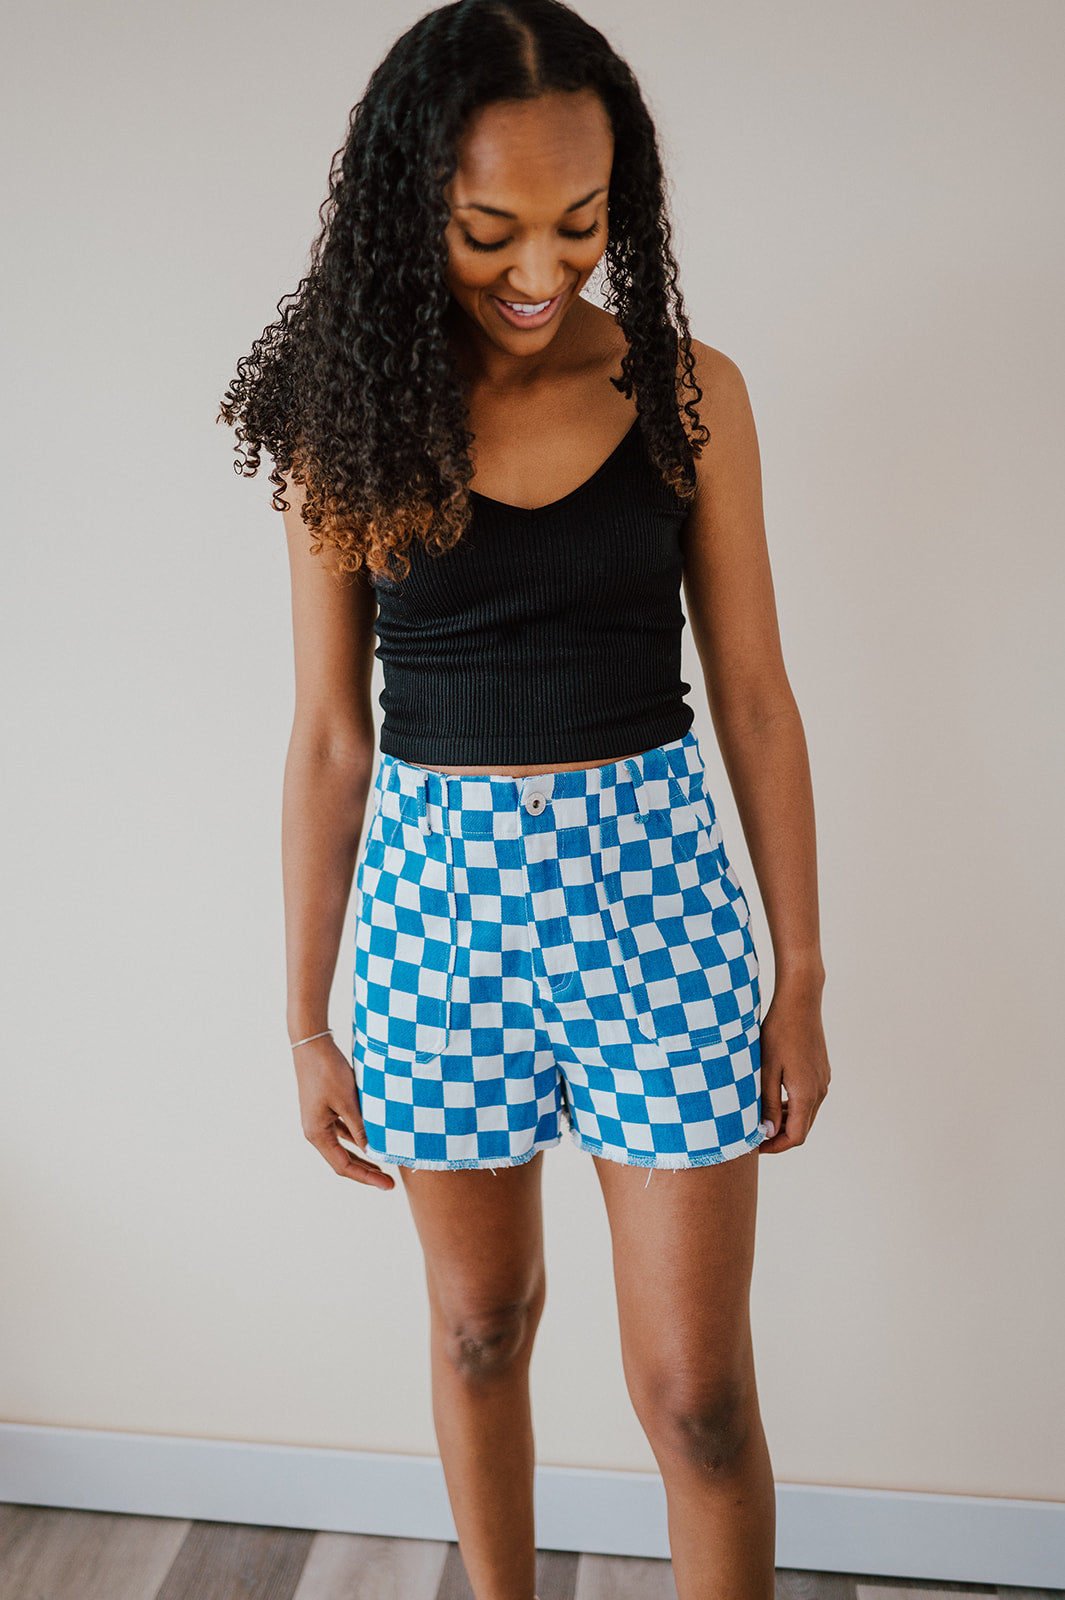 Kiki Checkered Shorts